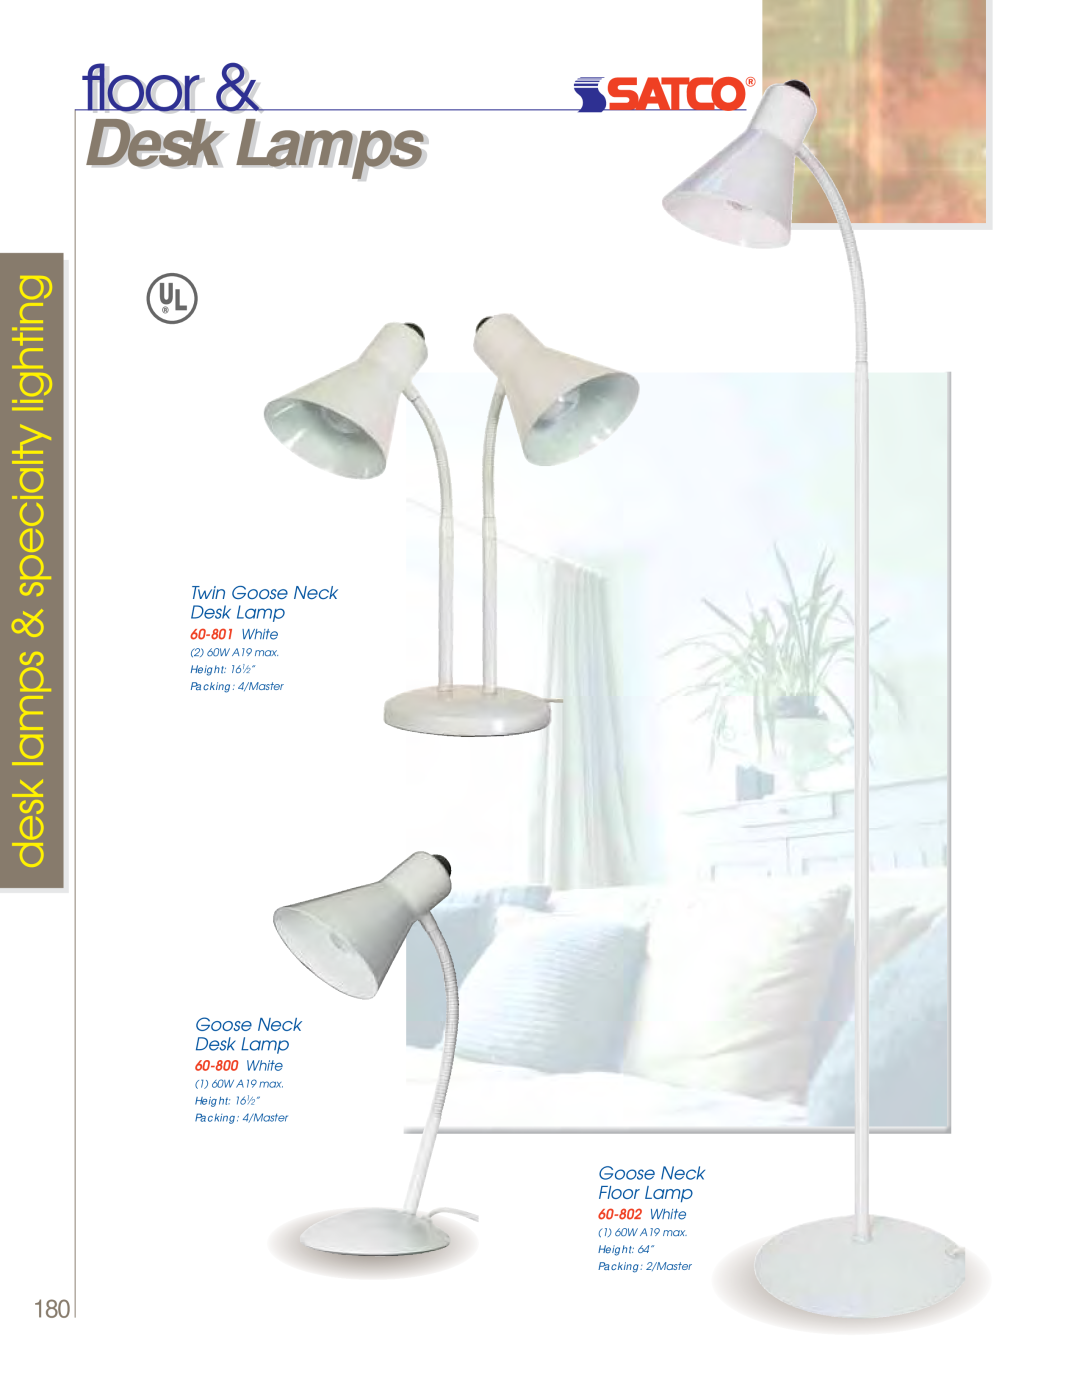 Satco Products 60-800, 60-801 manual floorl, DeskLamps, desk lamps & specialty lighting, Twin Goose Neck Desk Lamp, White 